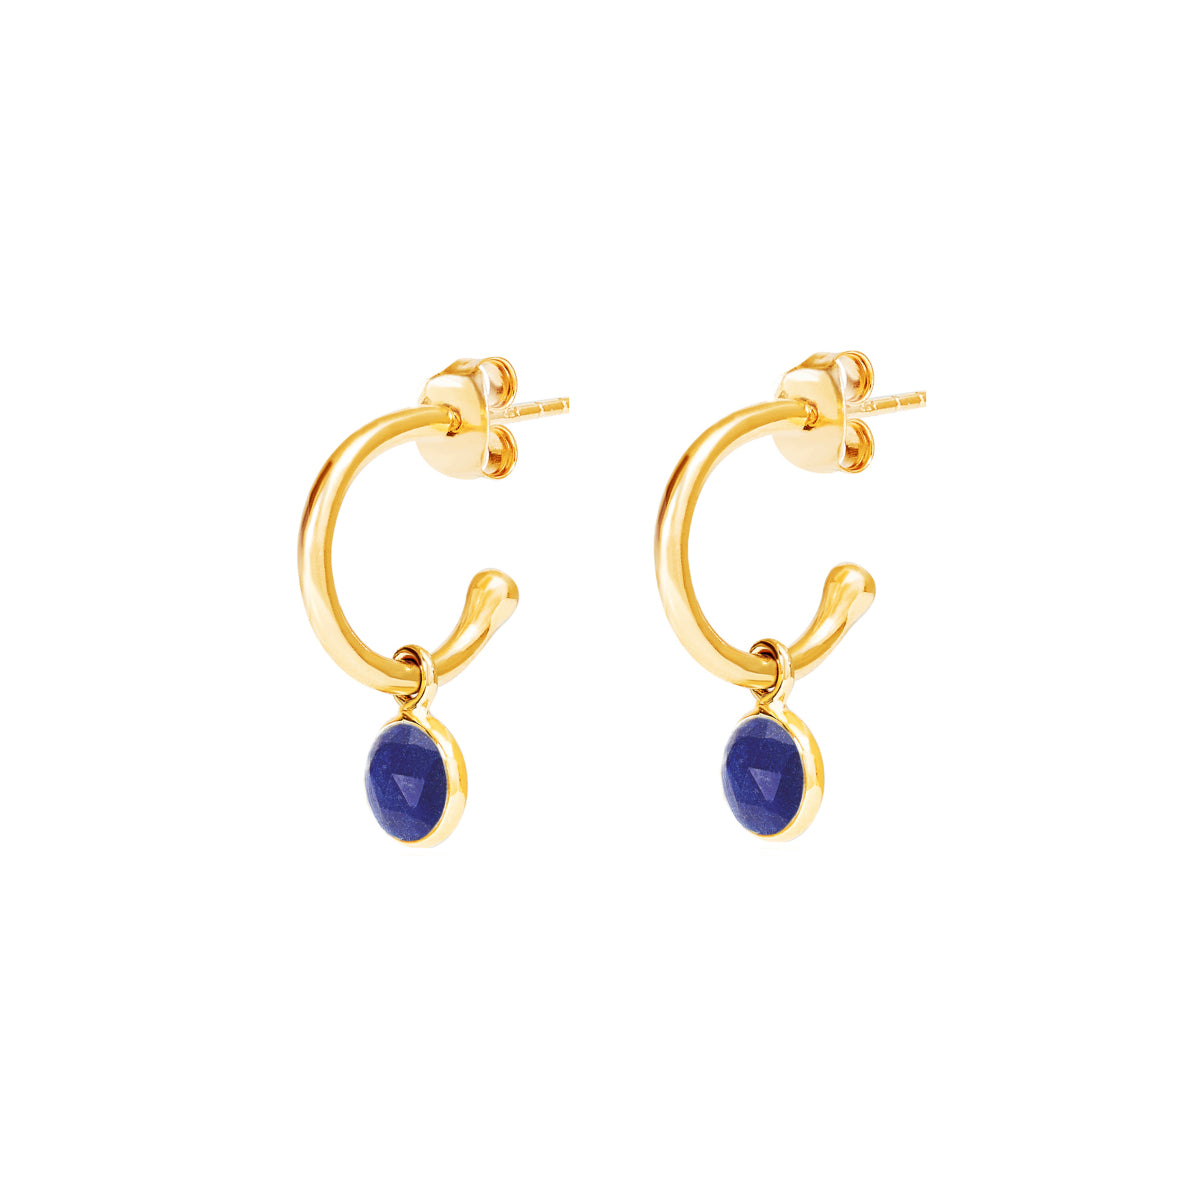 Gold Birthstone Hoop Earrings with Lapis Lazuli - Lulu B Jewellery